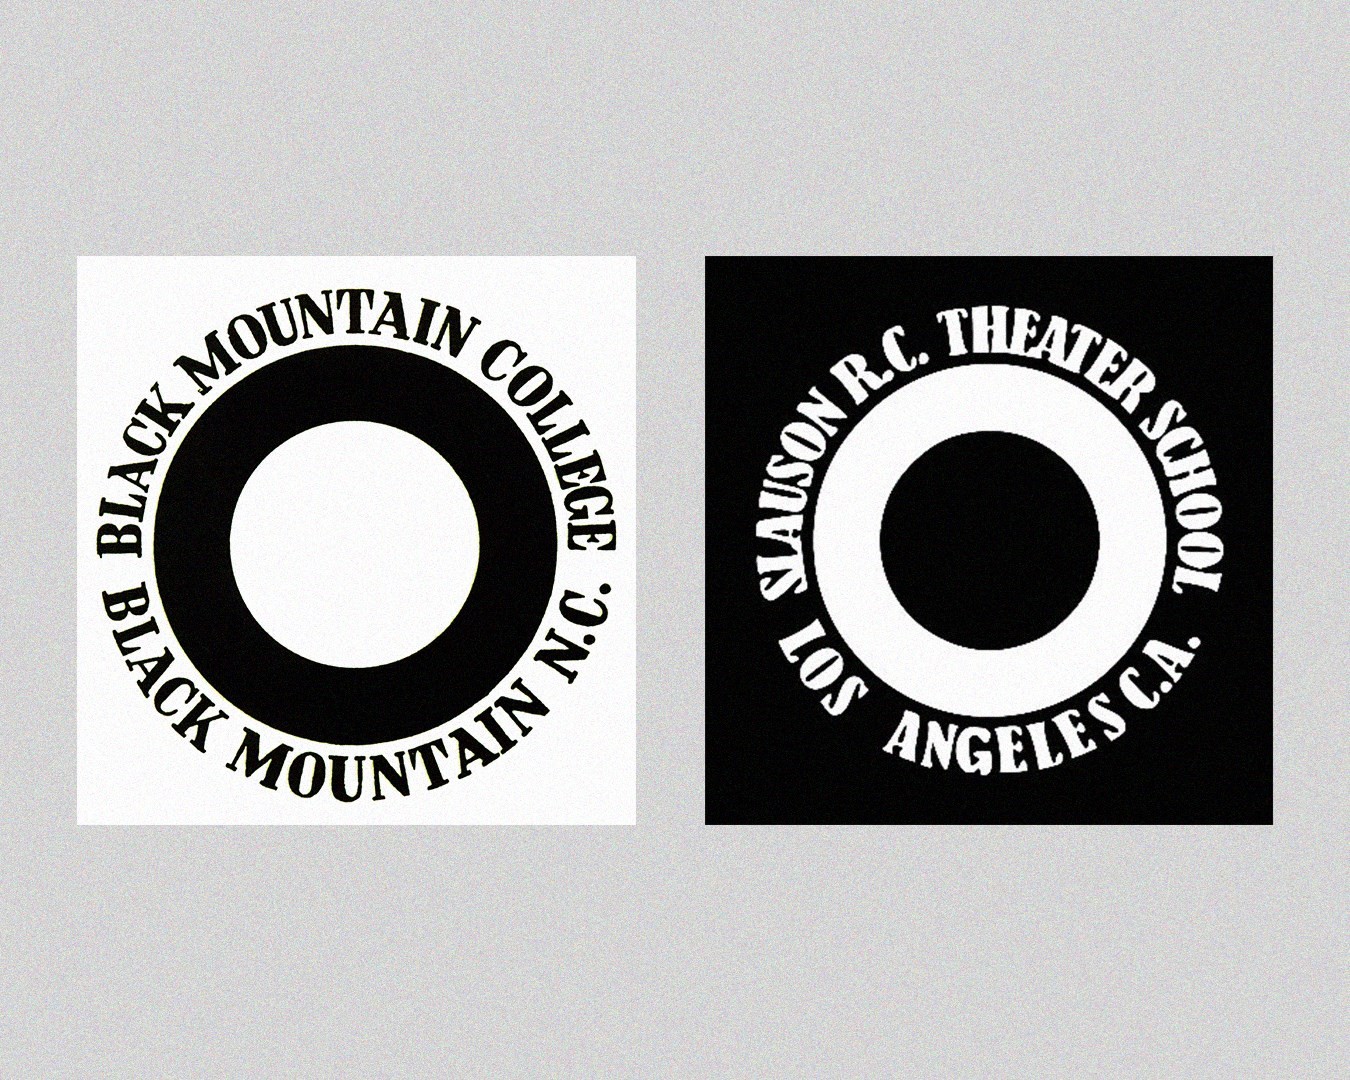 Slauson Rec and Black Mountain College logos